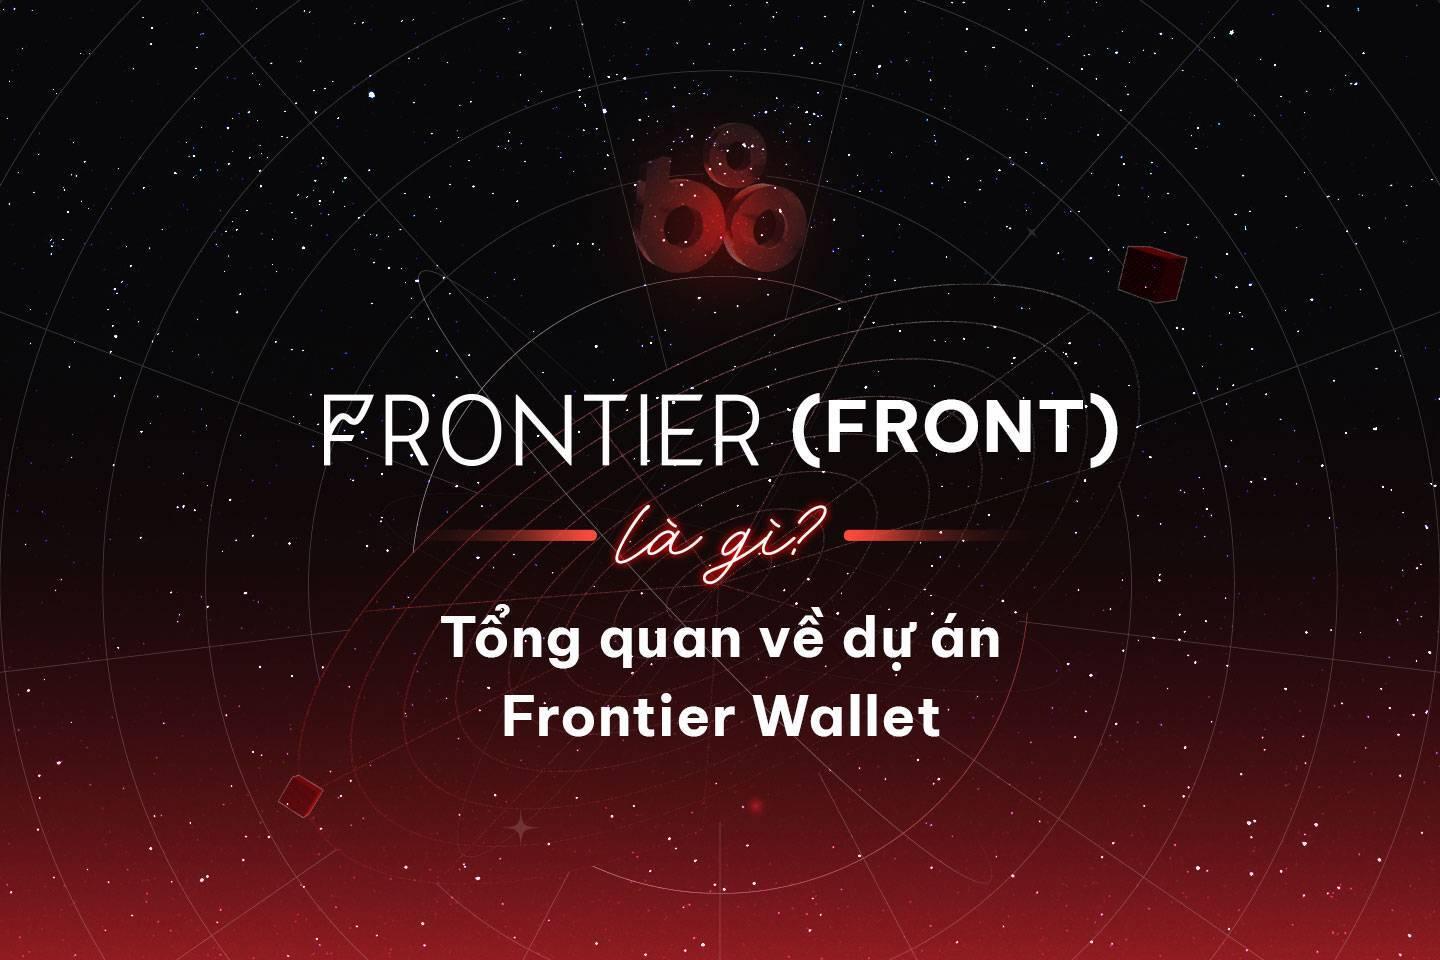 frontier-front-la-gi-tong-quan-ve-du-an-frontier-wallet